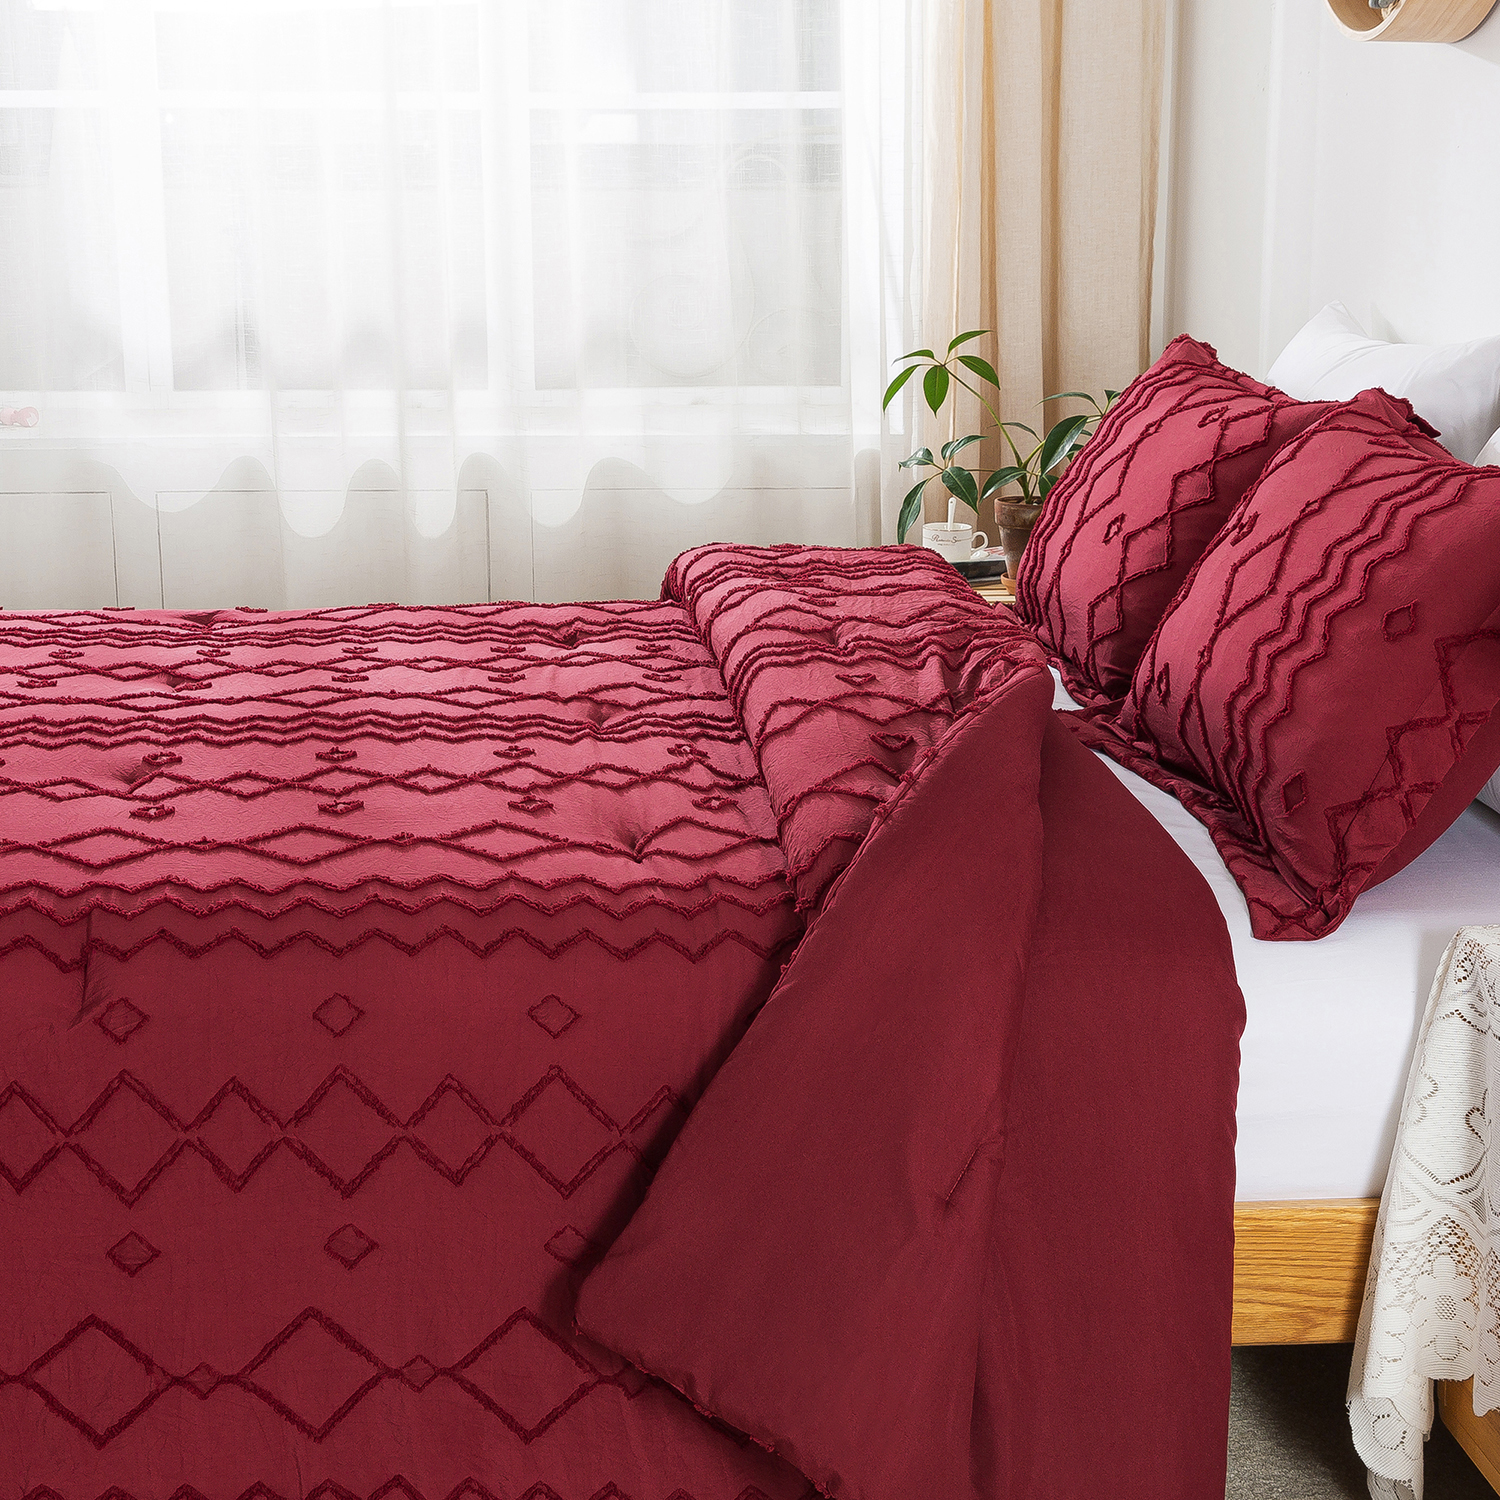 JML 2-3 Piece Soft Microfiber Tufted Comforter Set For All Seasons, Geometric&Diamond&Dot Embroidery Bedding Comforter Set